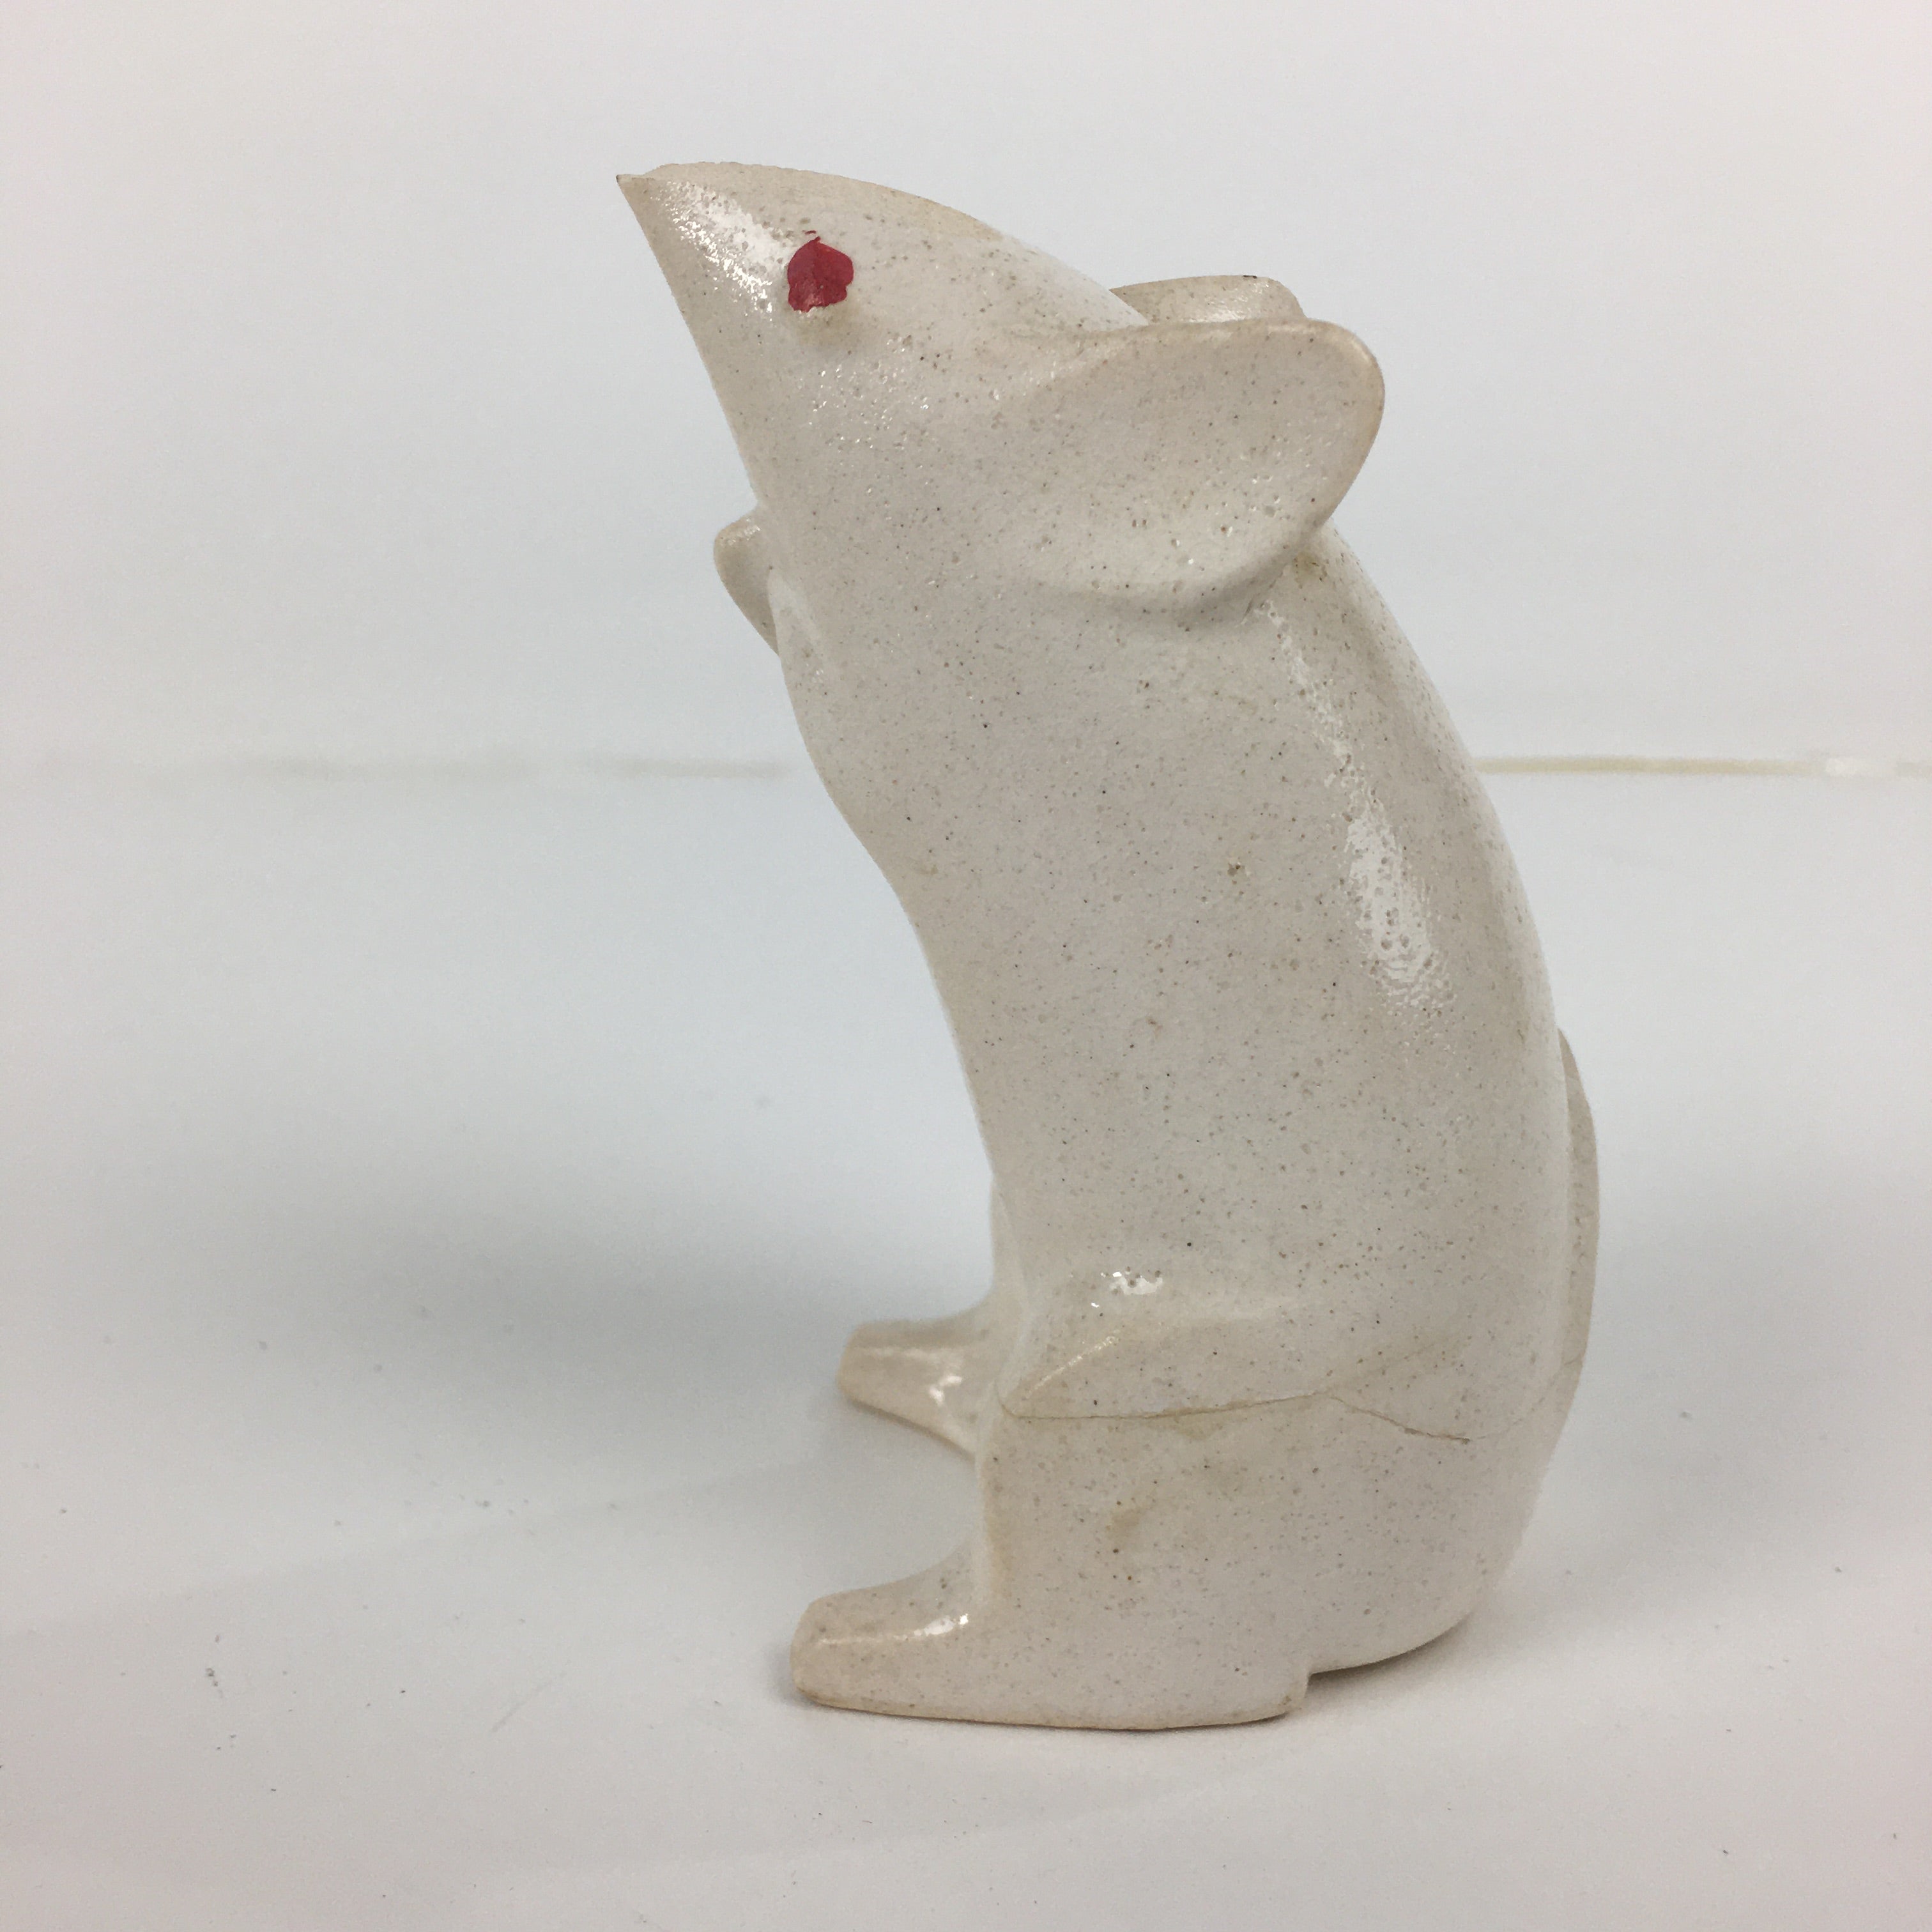 Japanese Porcelain Zodiac Rat Figurine Vtg White Lucky Charm Nezumi BD740